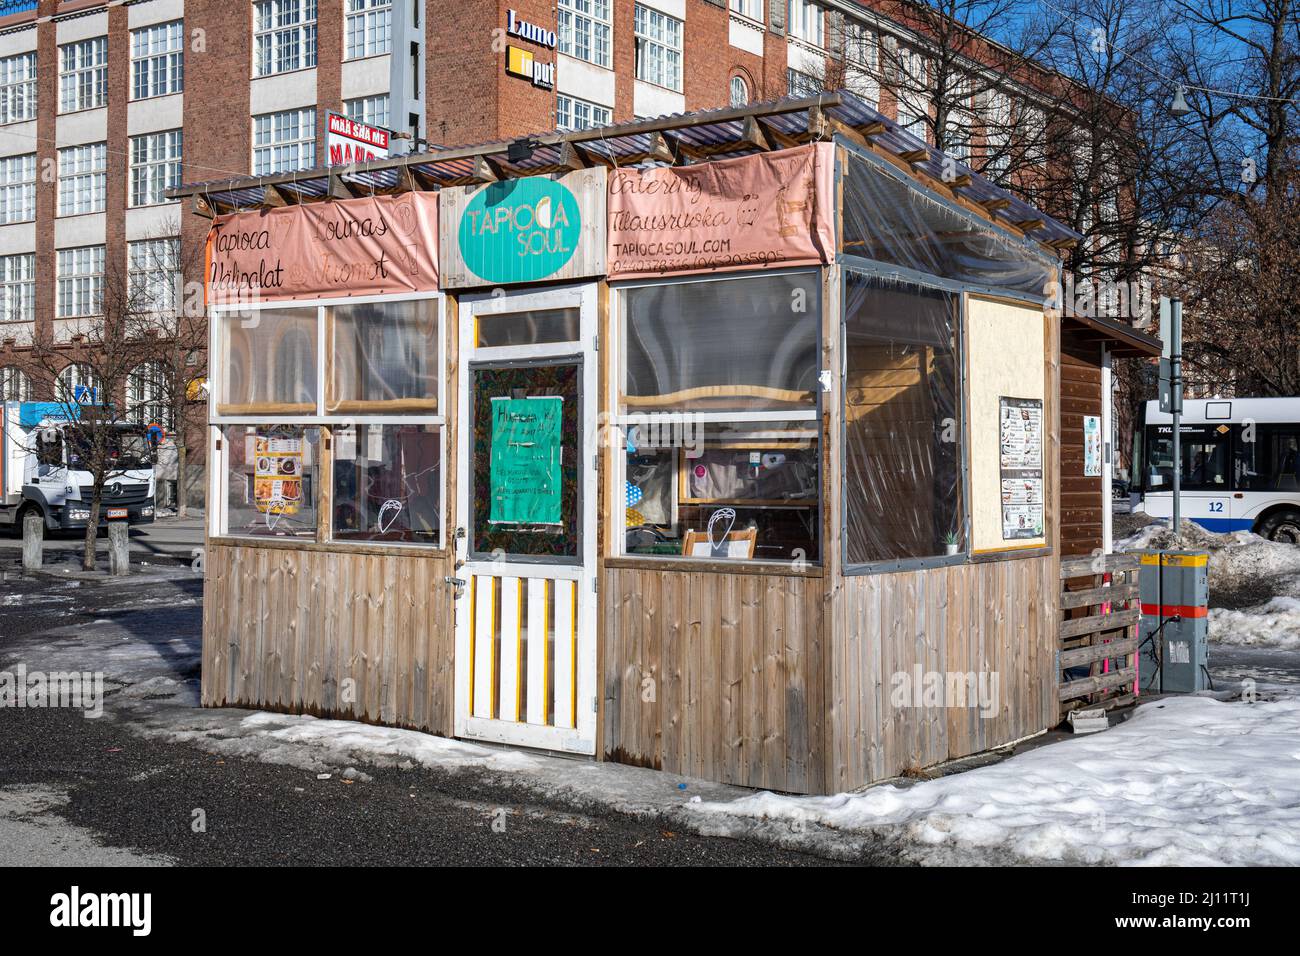 Tapioca Soul, Brazilian street food hut on Tammelan tori or market square in Tampere, Finland Stock Photo